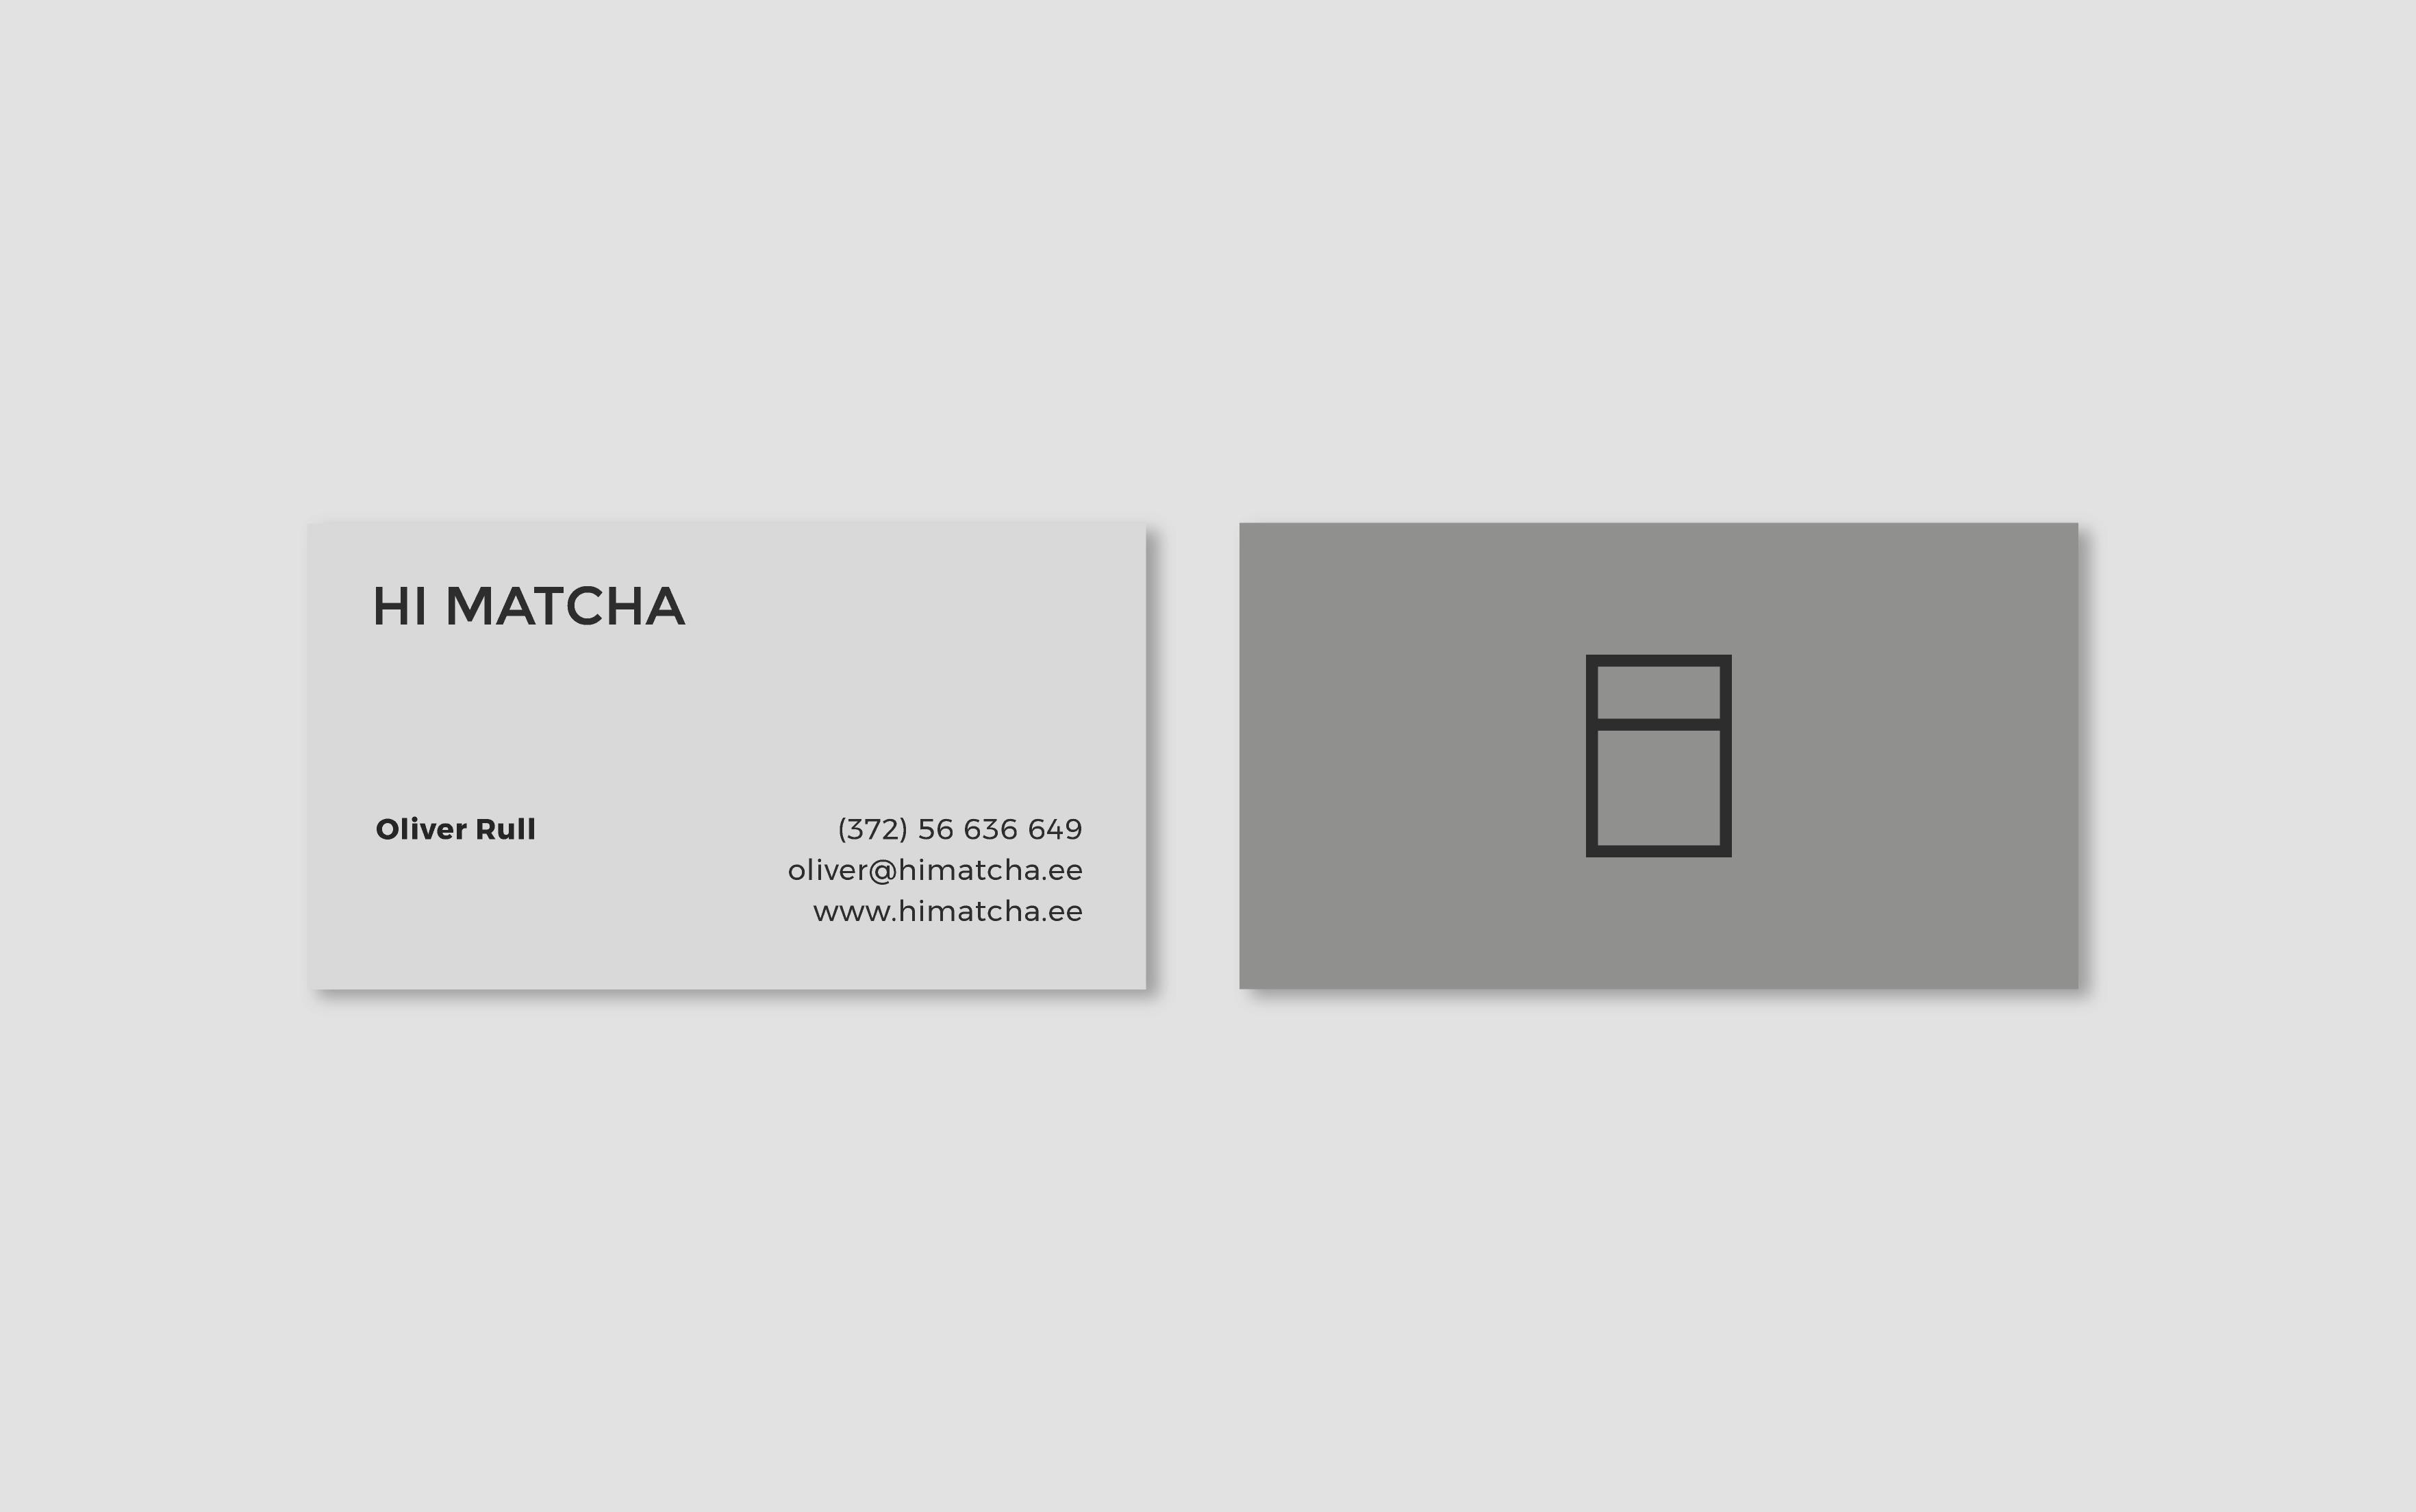 https://site.no11.ee/wp-content/uploads/2020/01/No11_Hi-Matcha_business-card-design.jpg